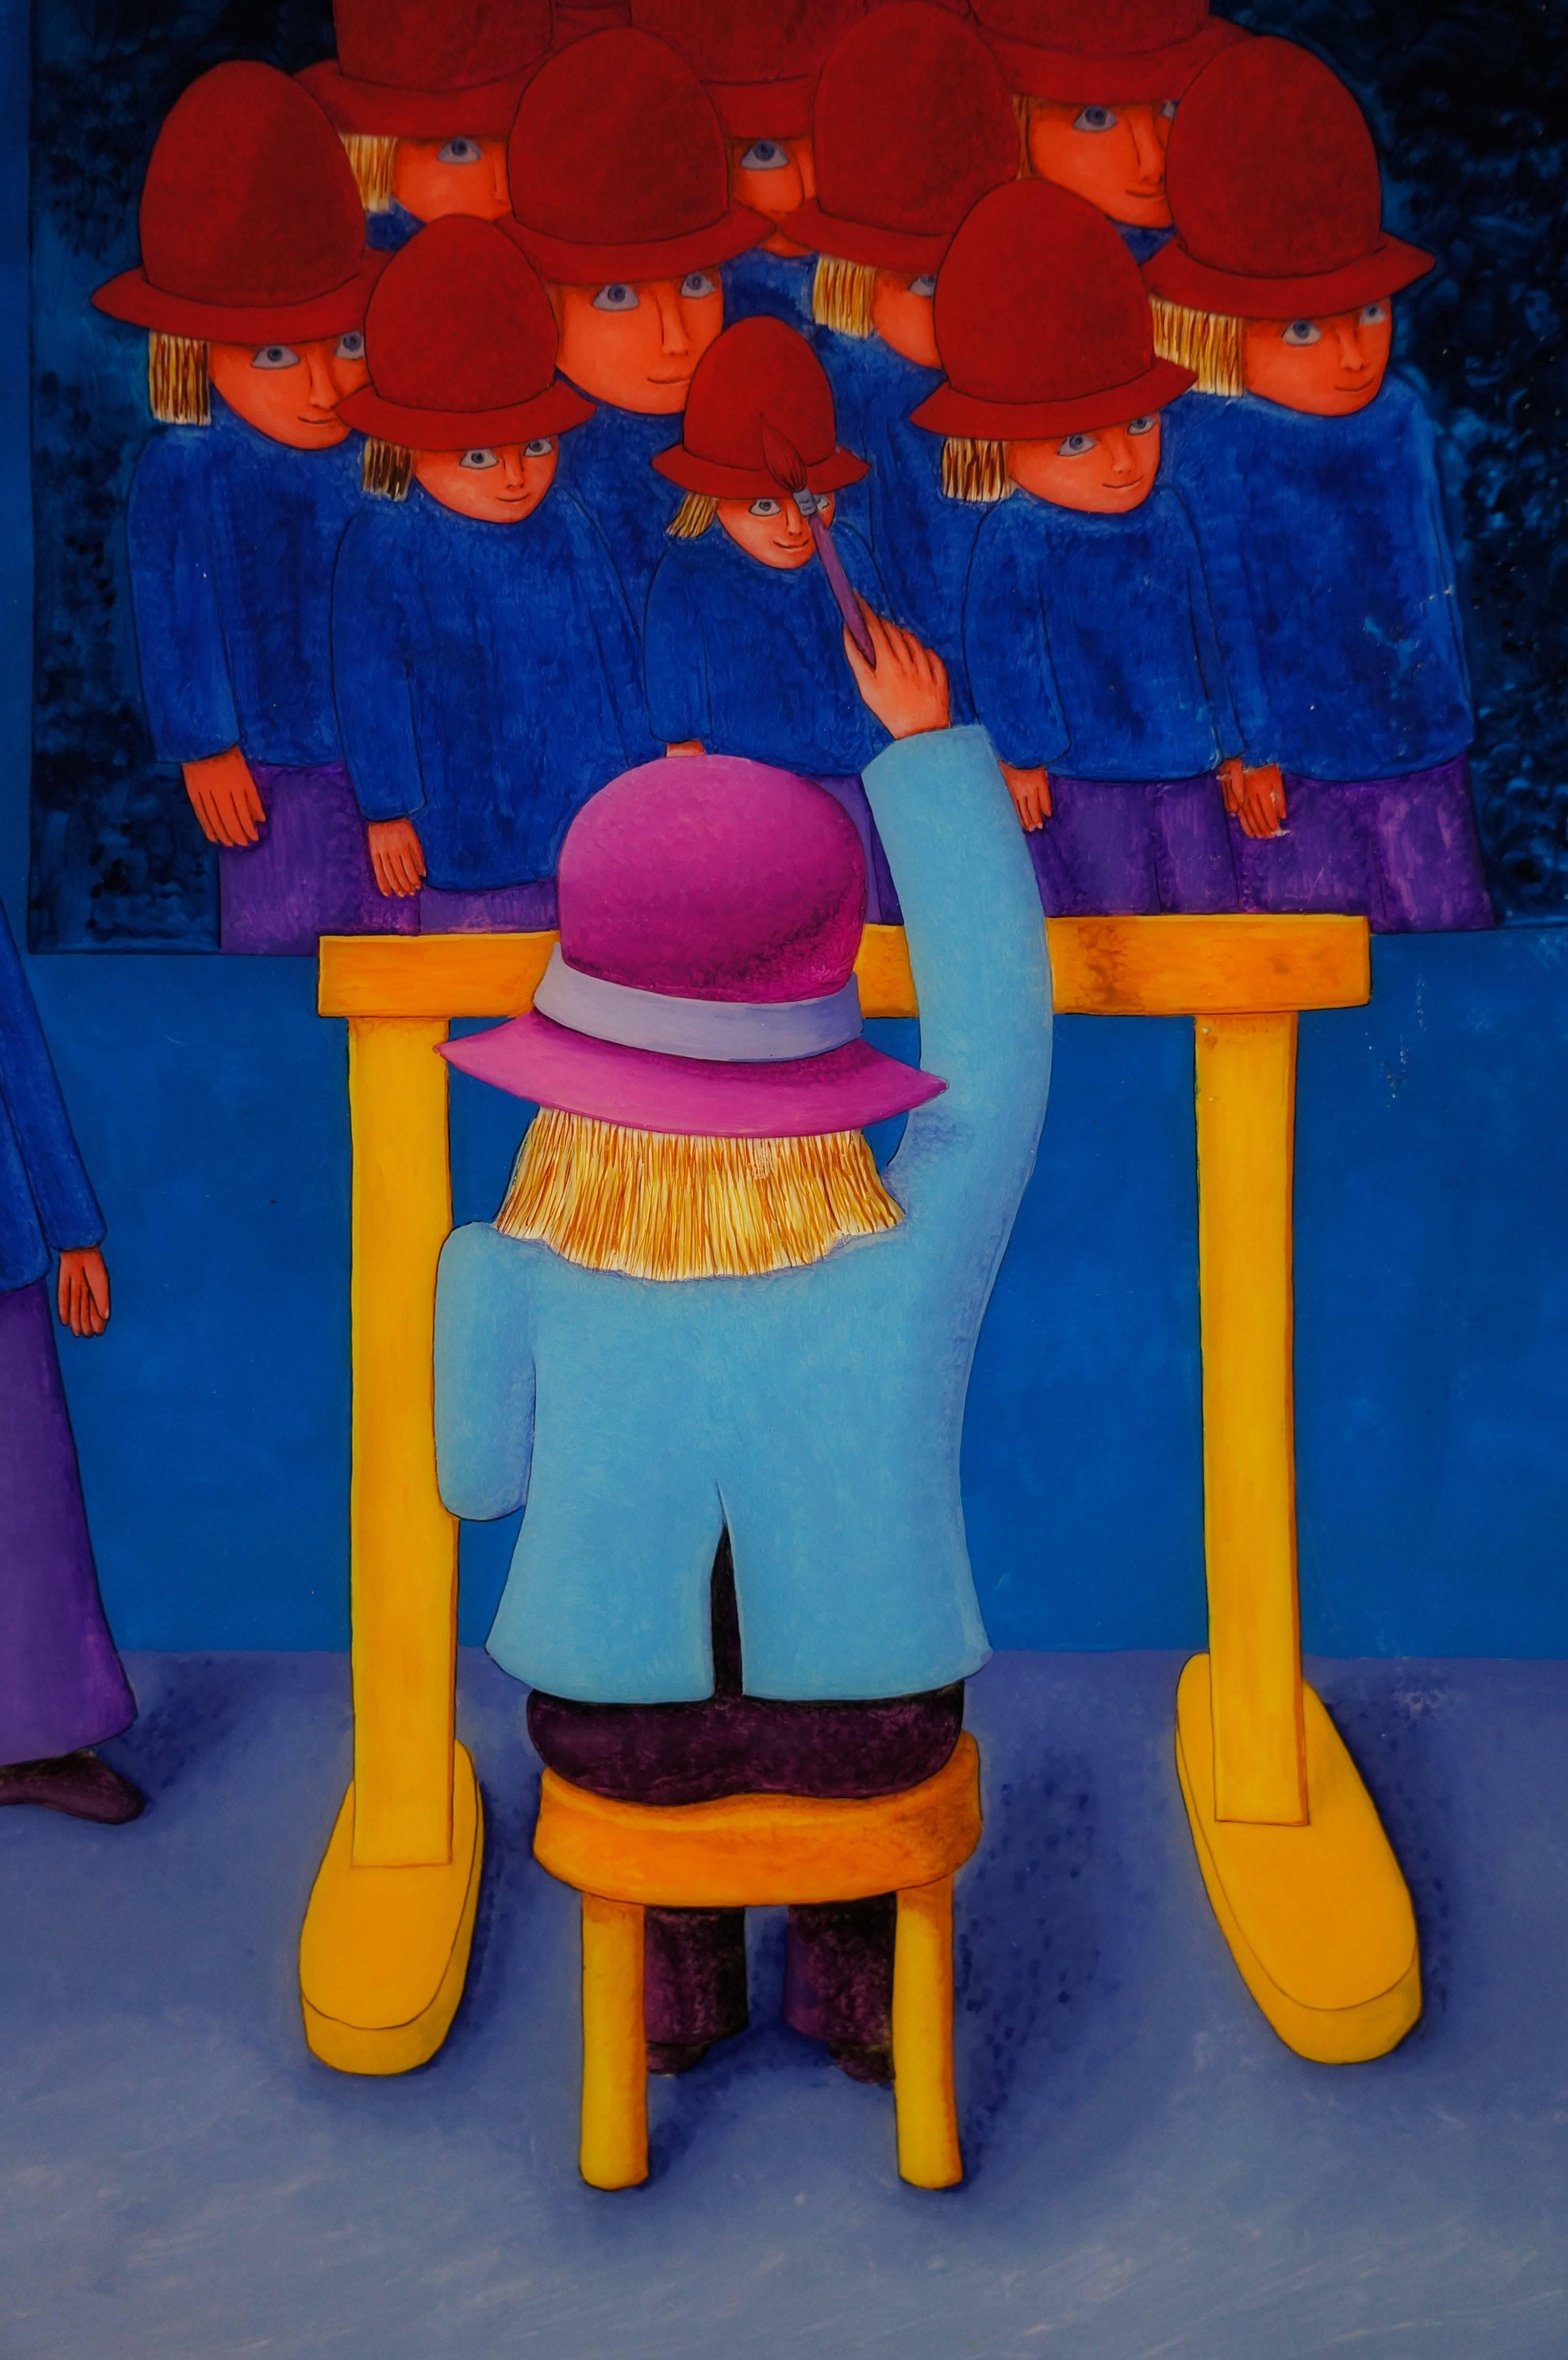 Dream Of School - Oil on canvas, cm. 52x76, framed - Contemporary Painting by Sblobodan